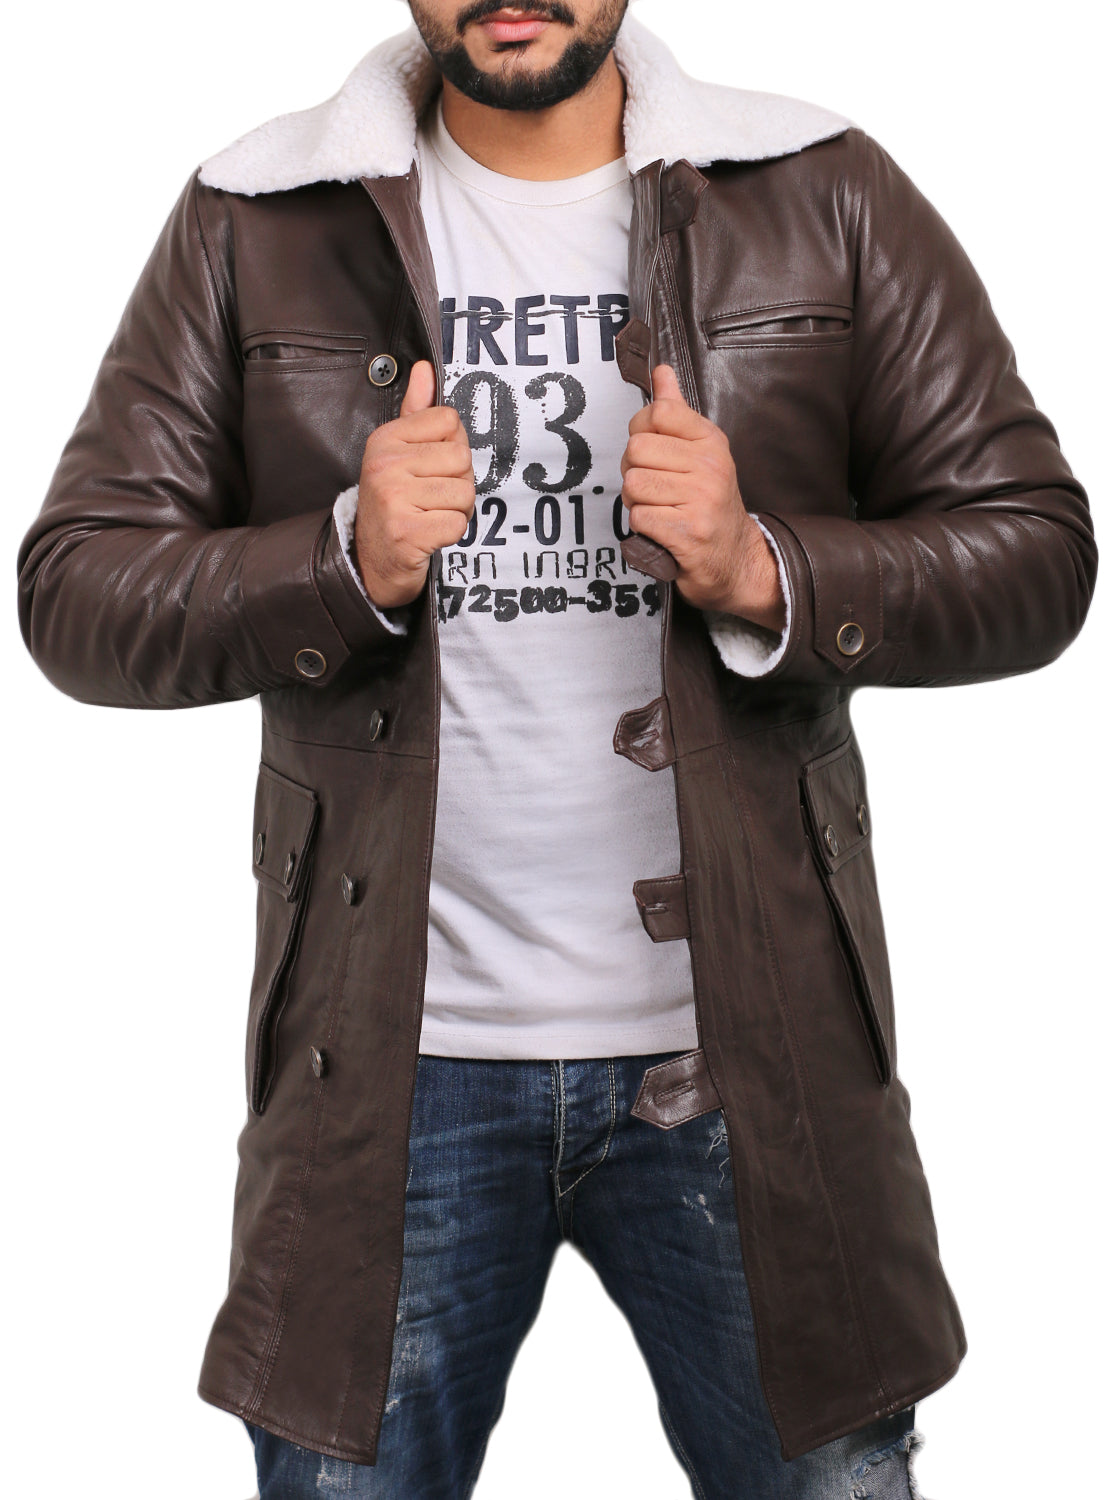 Leather Jackets Hub Mens Genuine Lambskin Leather Over Coat (Black, Shearling Coat) - 1502848